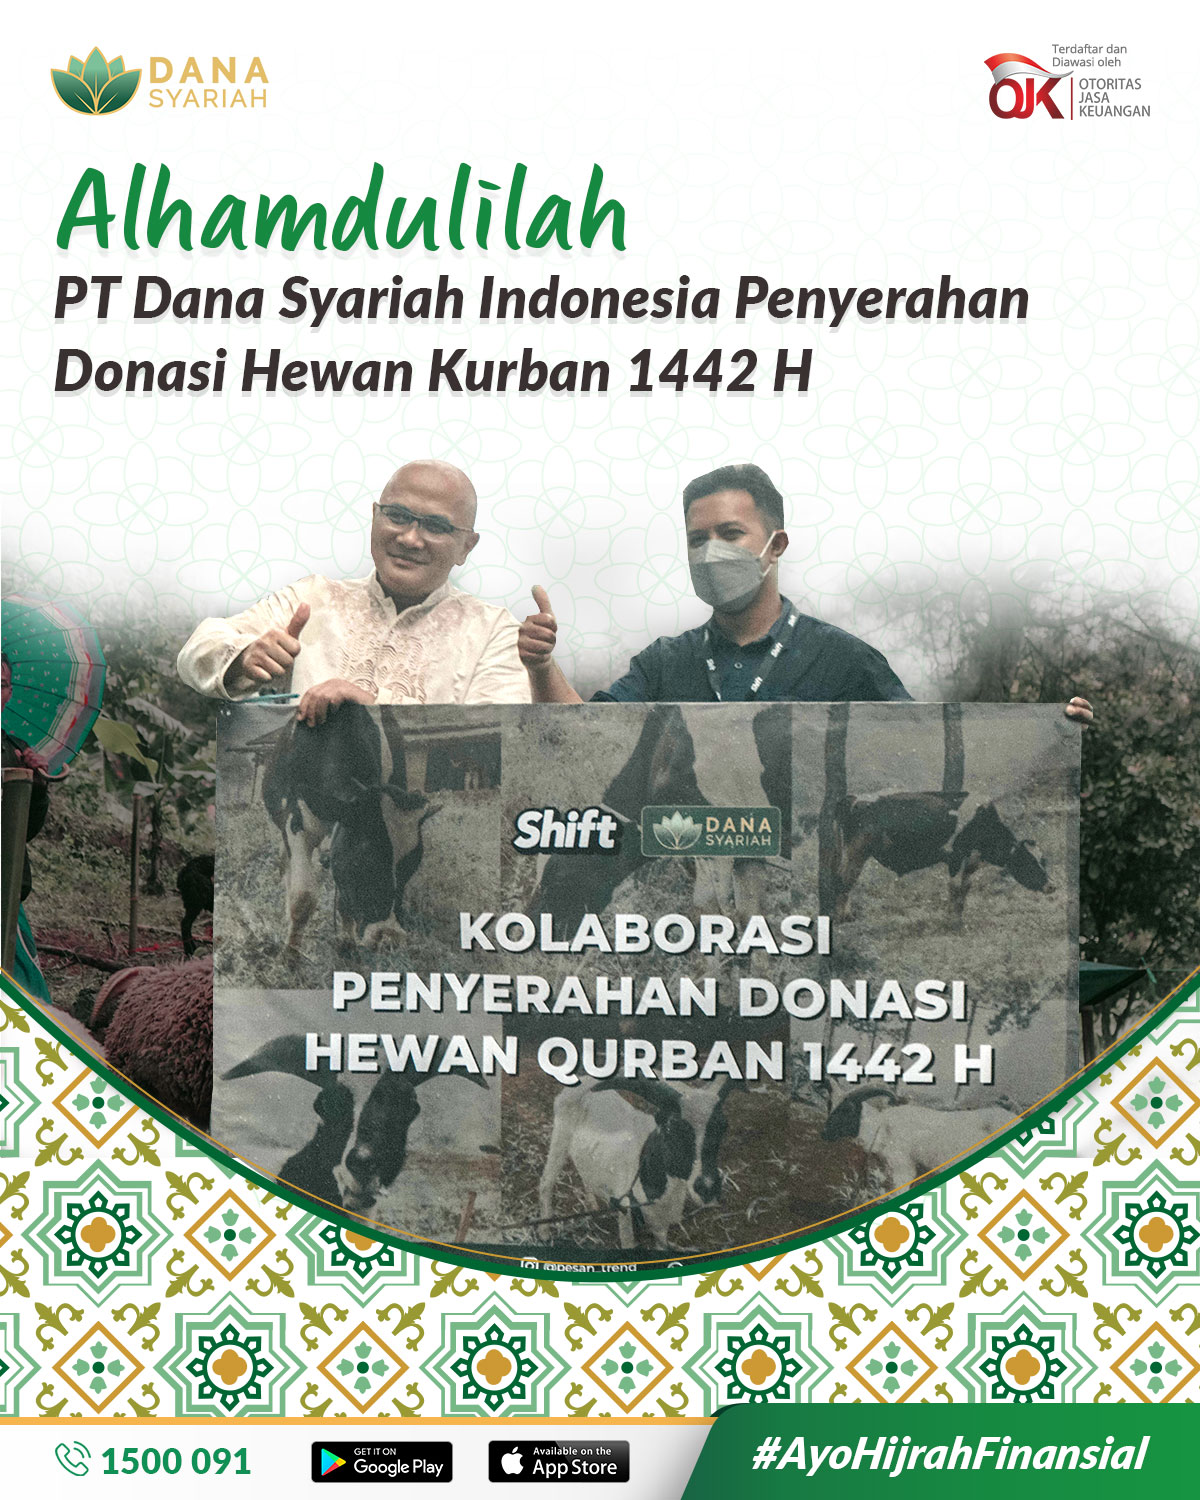 Dana Syariah PT Dana Syariah Indonesia Penyerahan Donasi Hewan Qurban 1442 H